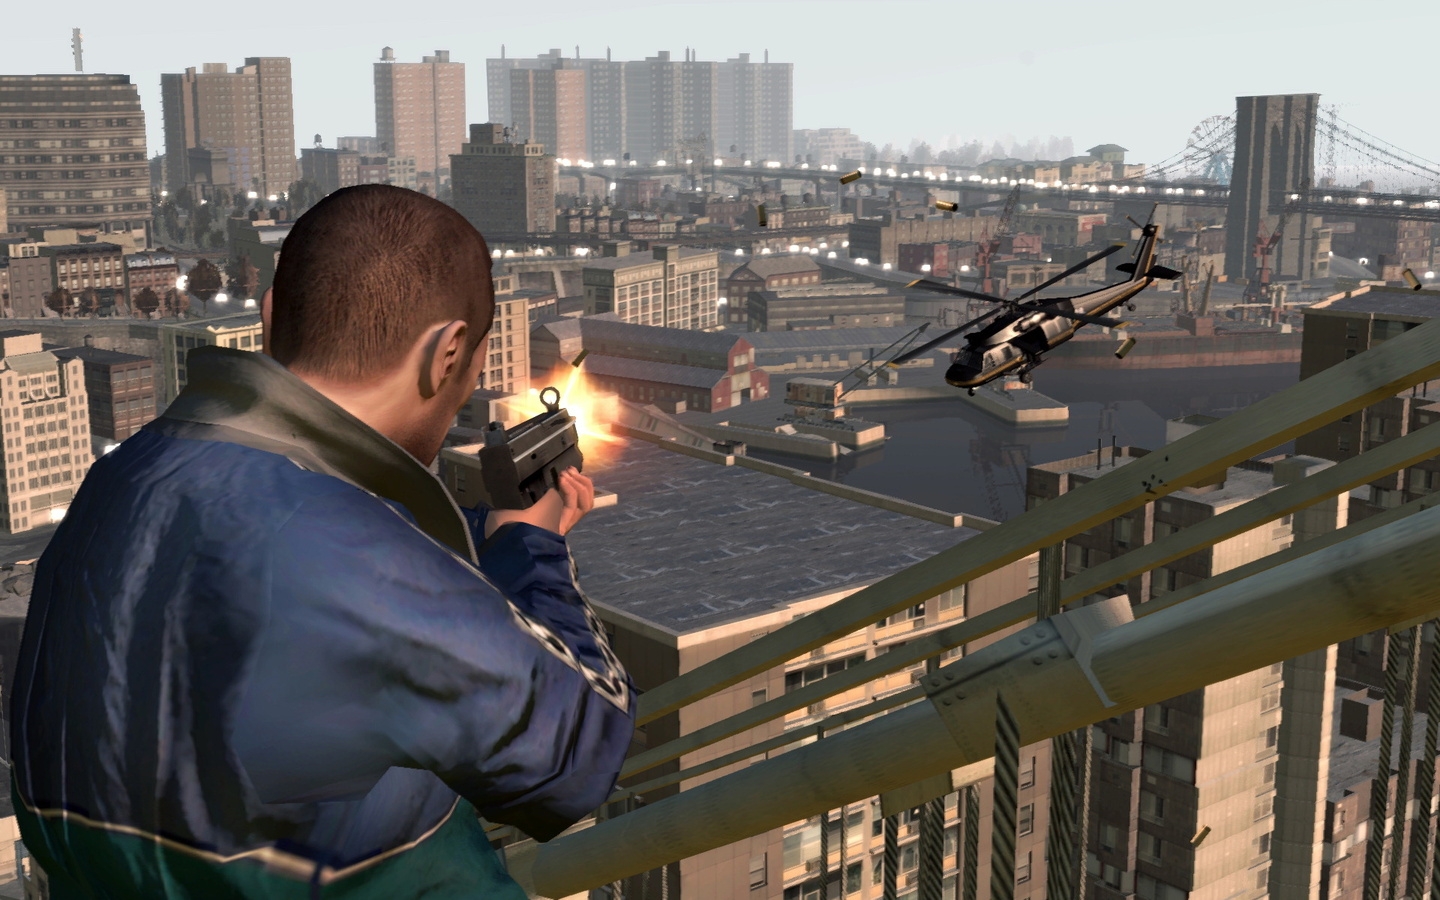 Grand Theft Auto IV (PC) / Grand Theft Auto IV - Complete Edition (PC)